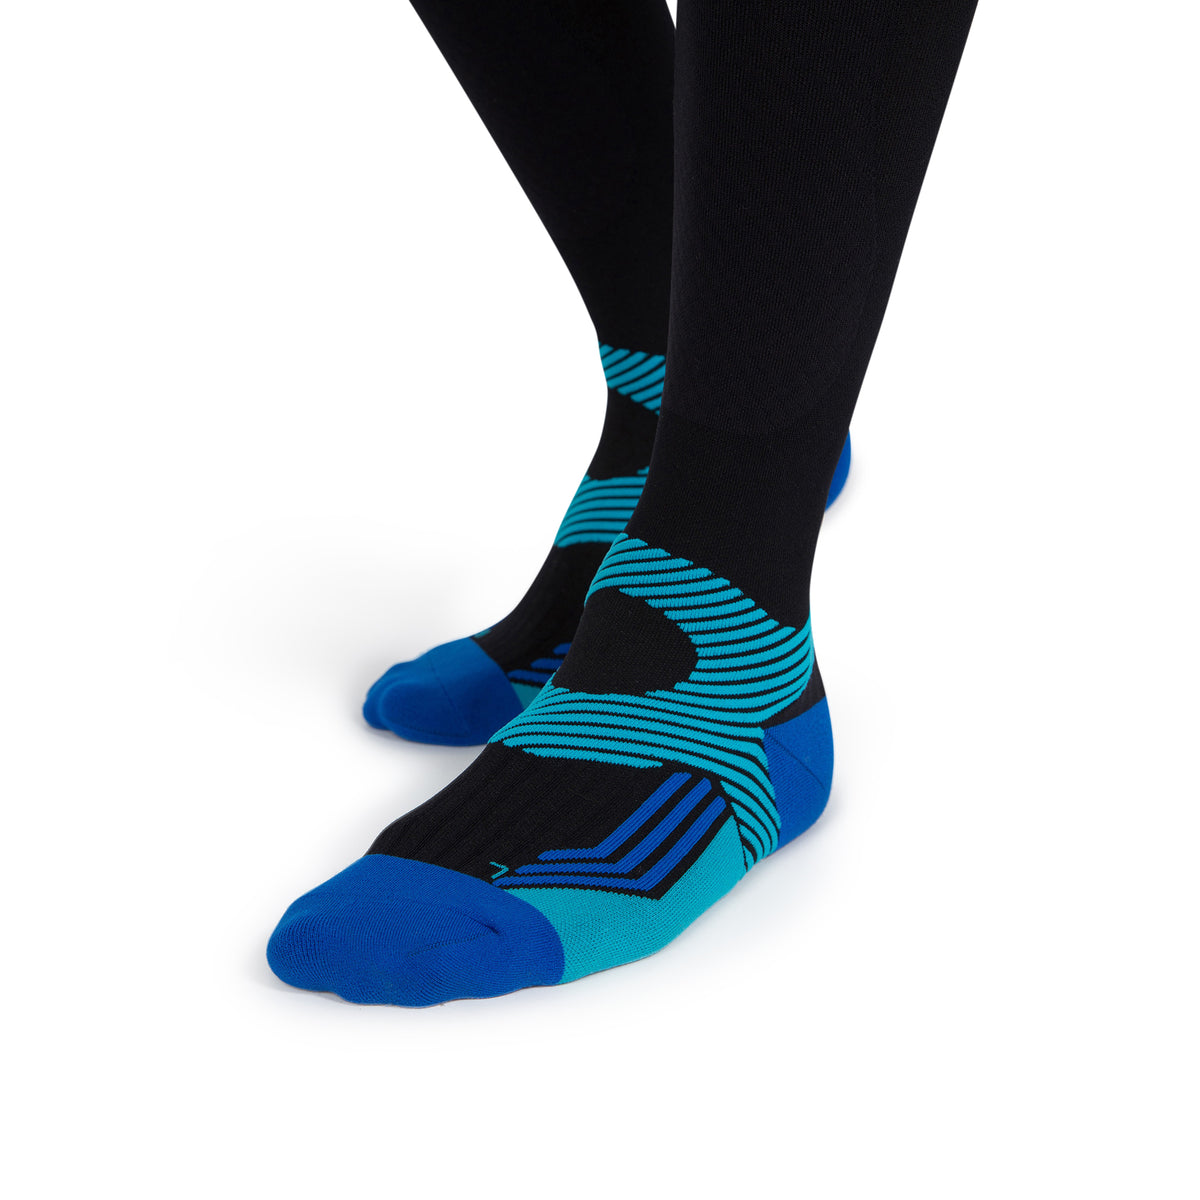 JUST RIDER Compression Sleeve for Men & Women - Best Calf Socks for  Running, Shin Splint, Calf Pain Relief, Leg Support Sleeve for Runners,  Medical, Air Travel, Nursing, Cycling (Black, Medium) 